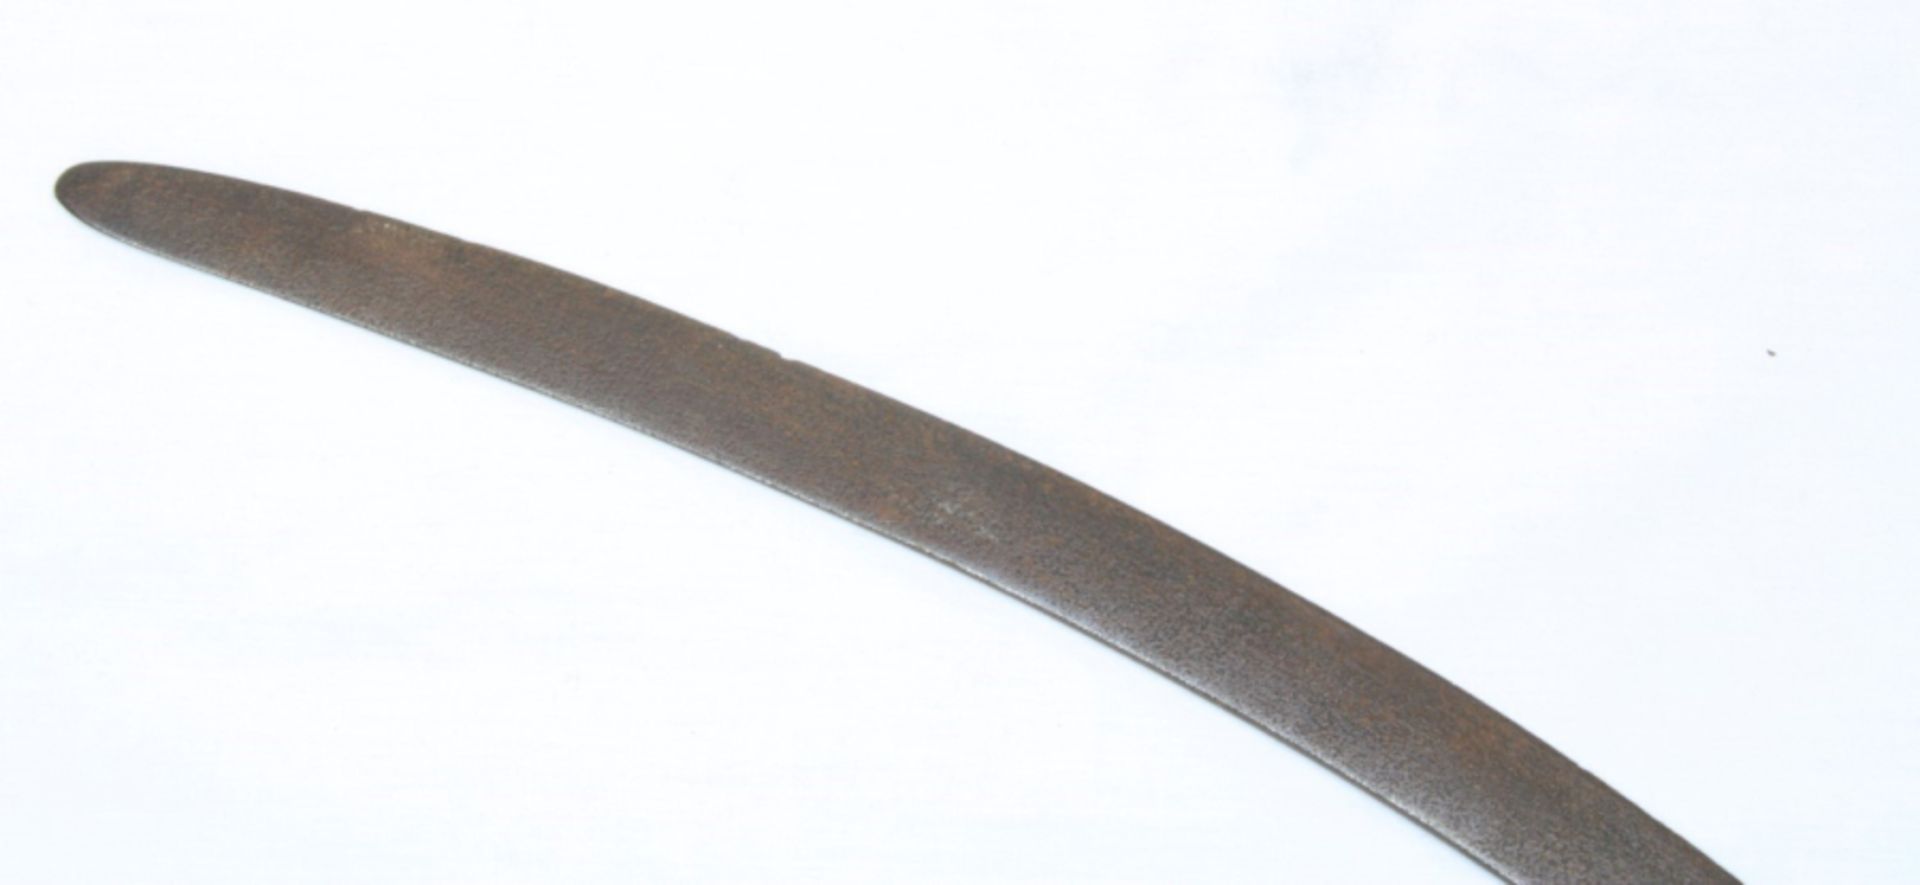 19th century Shamshir sword - Image 6 of 6